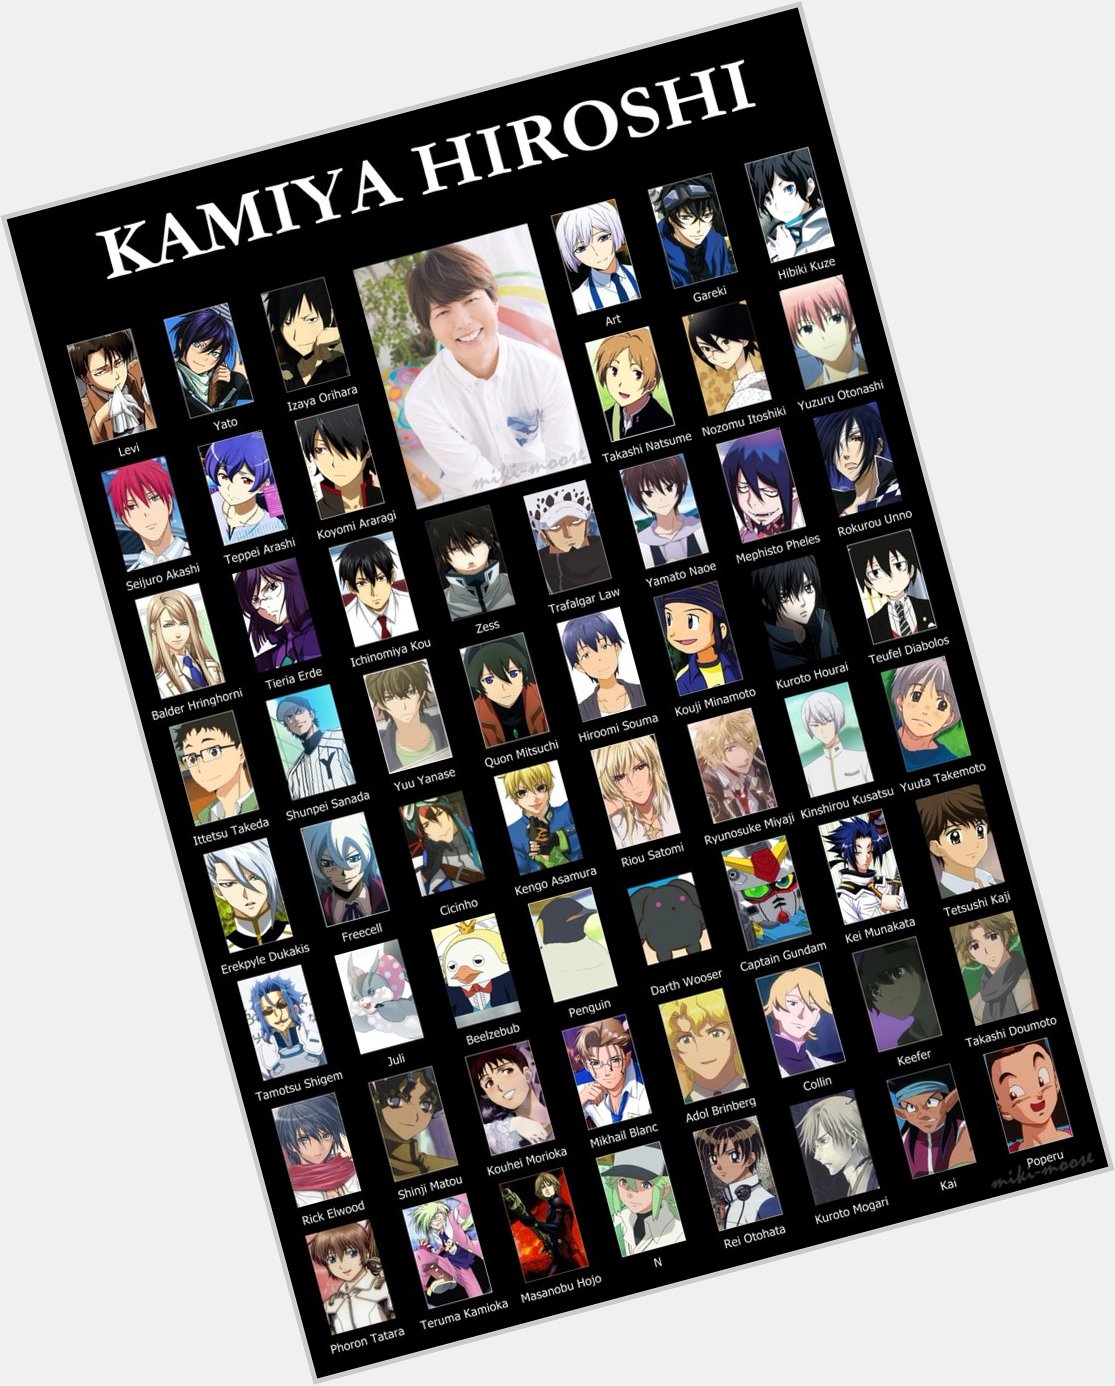 Happy Birthday to one of my favourite voice actors ever: Hiroshi Kamiya. 